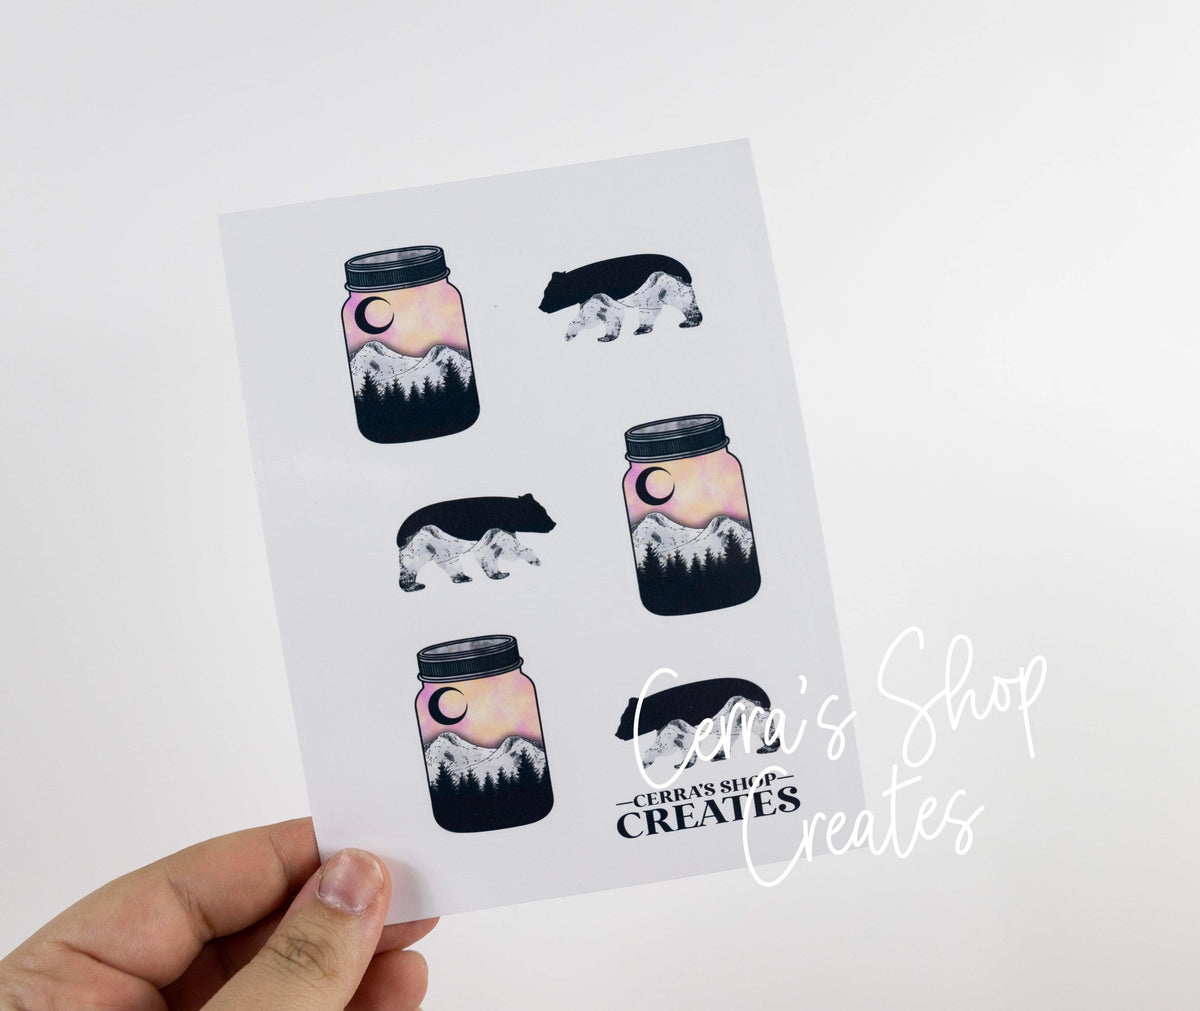 Outdoorsy Sticker Sheets  Cerra's Shop Creates   